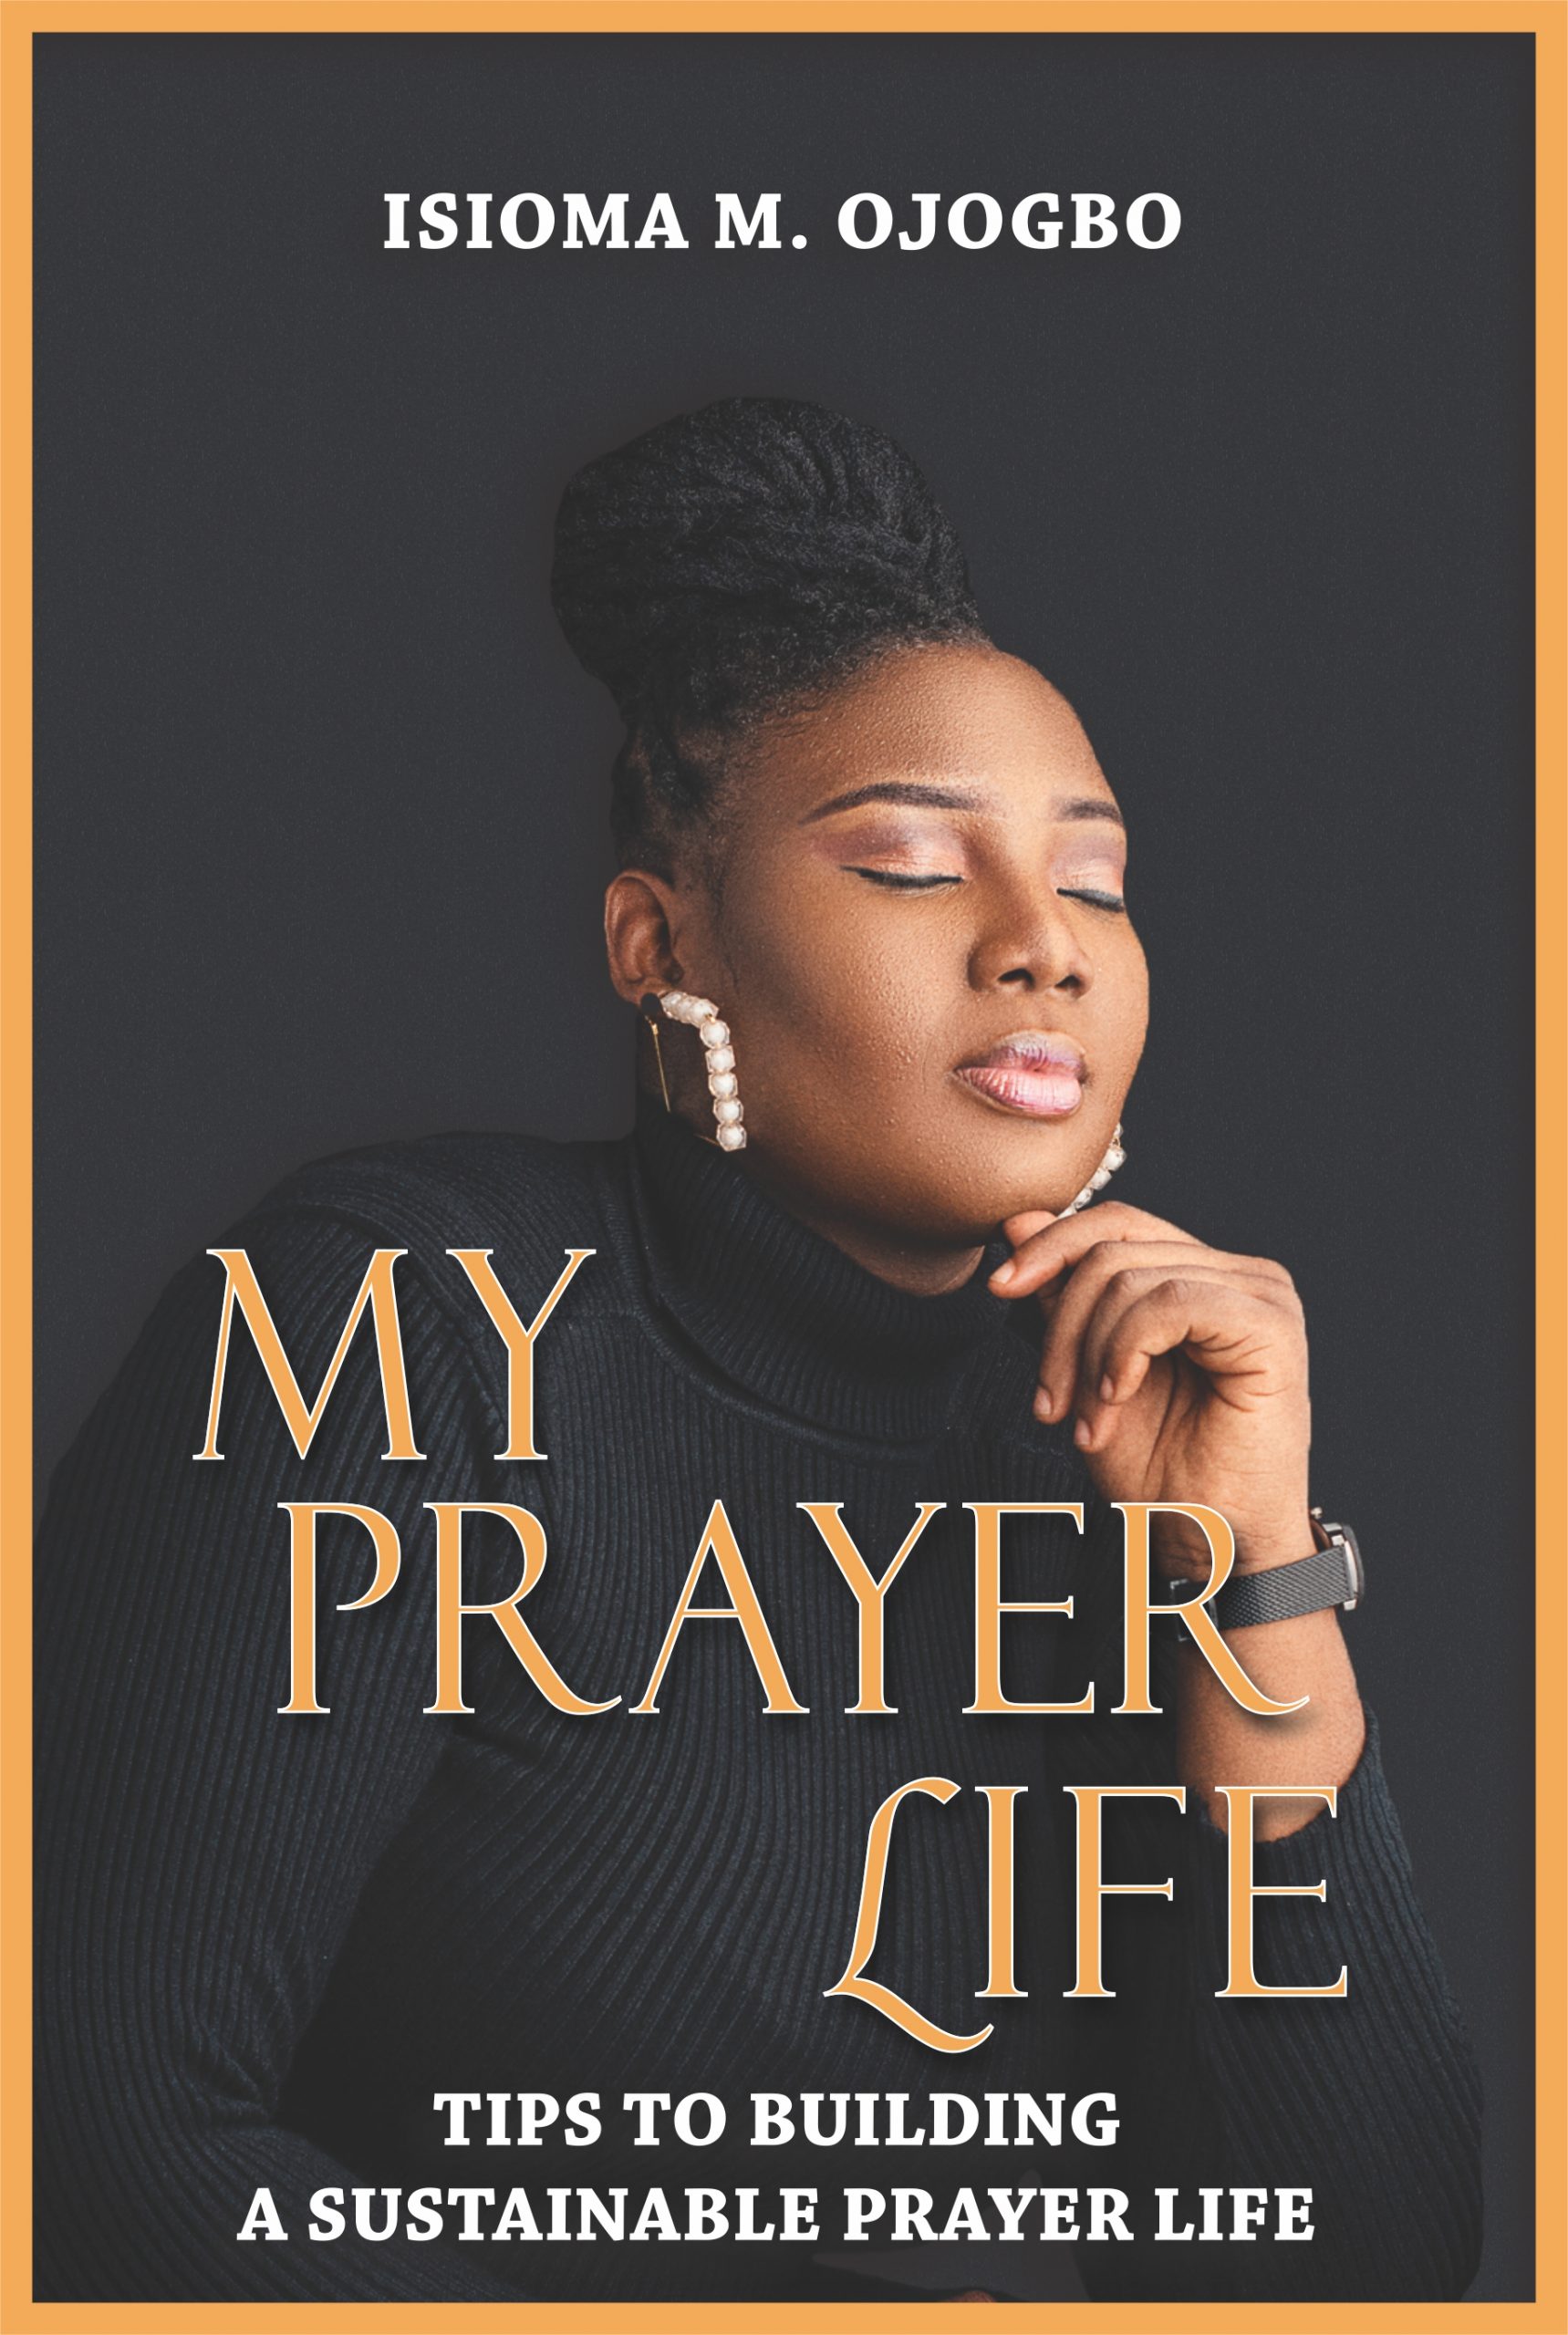 Cover - My prayer life